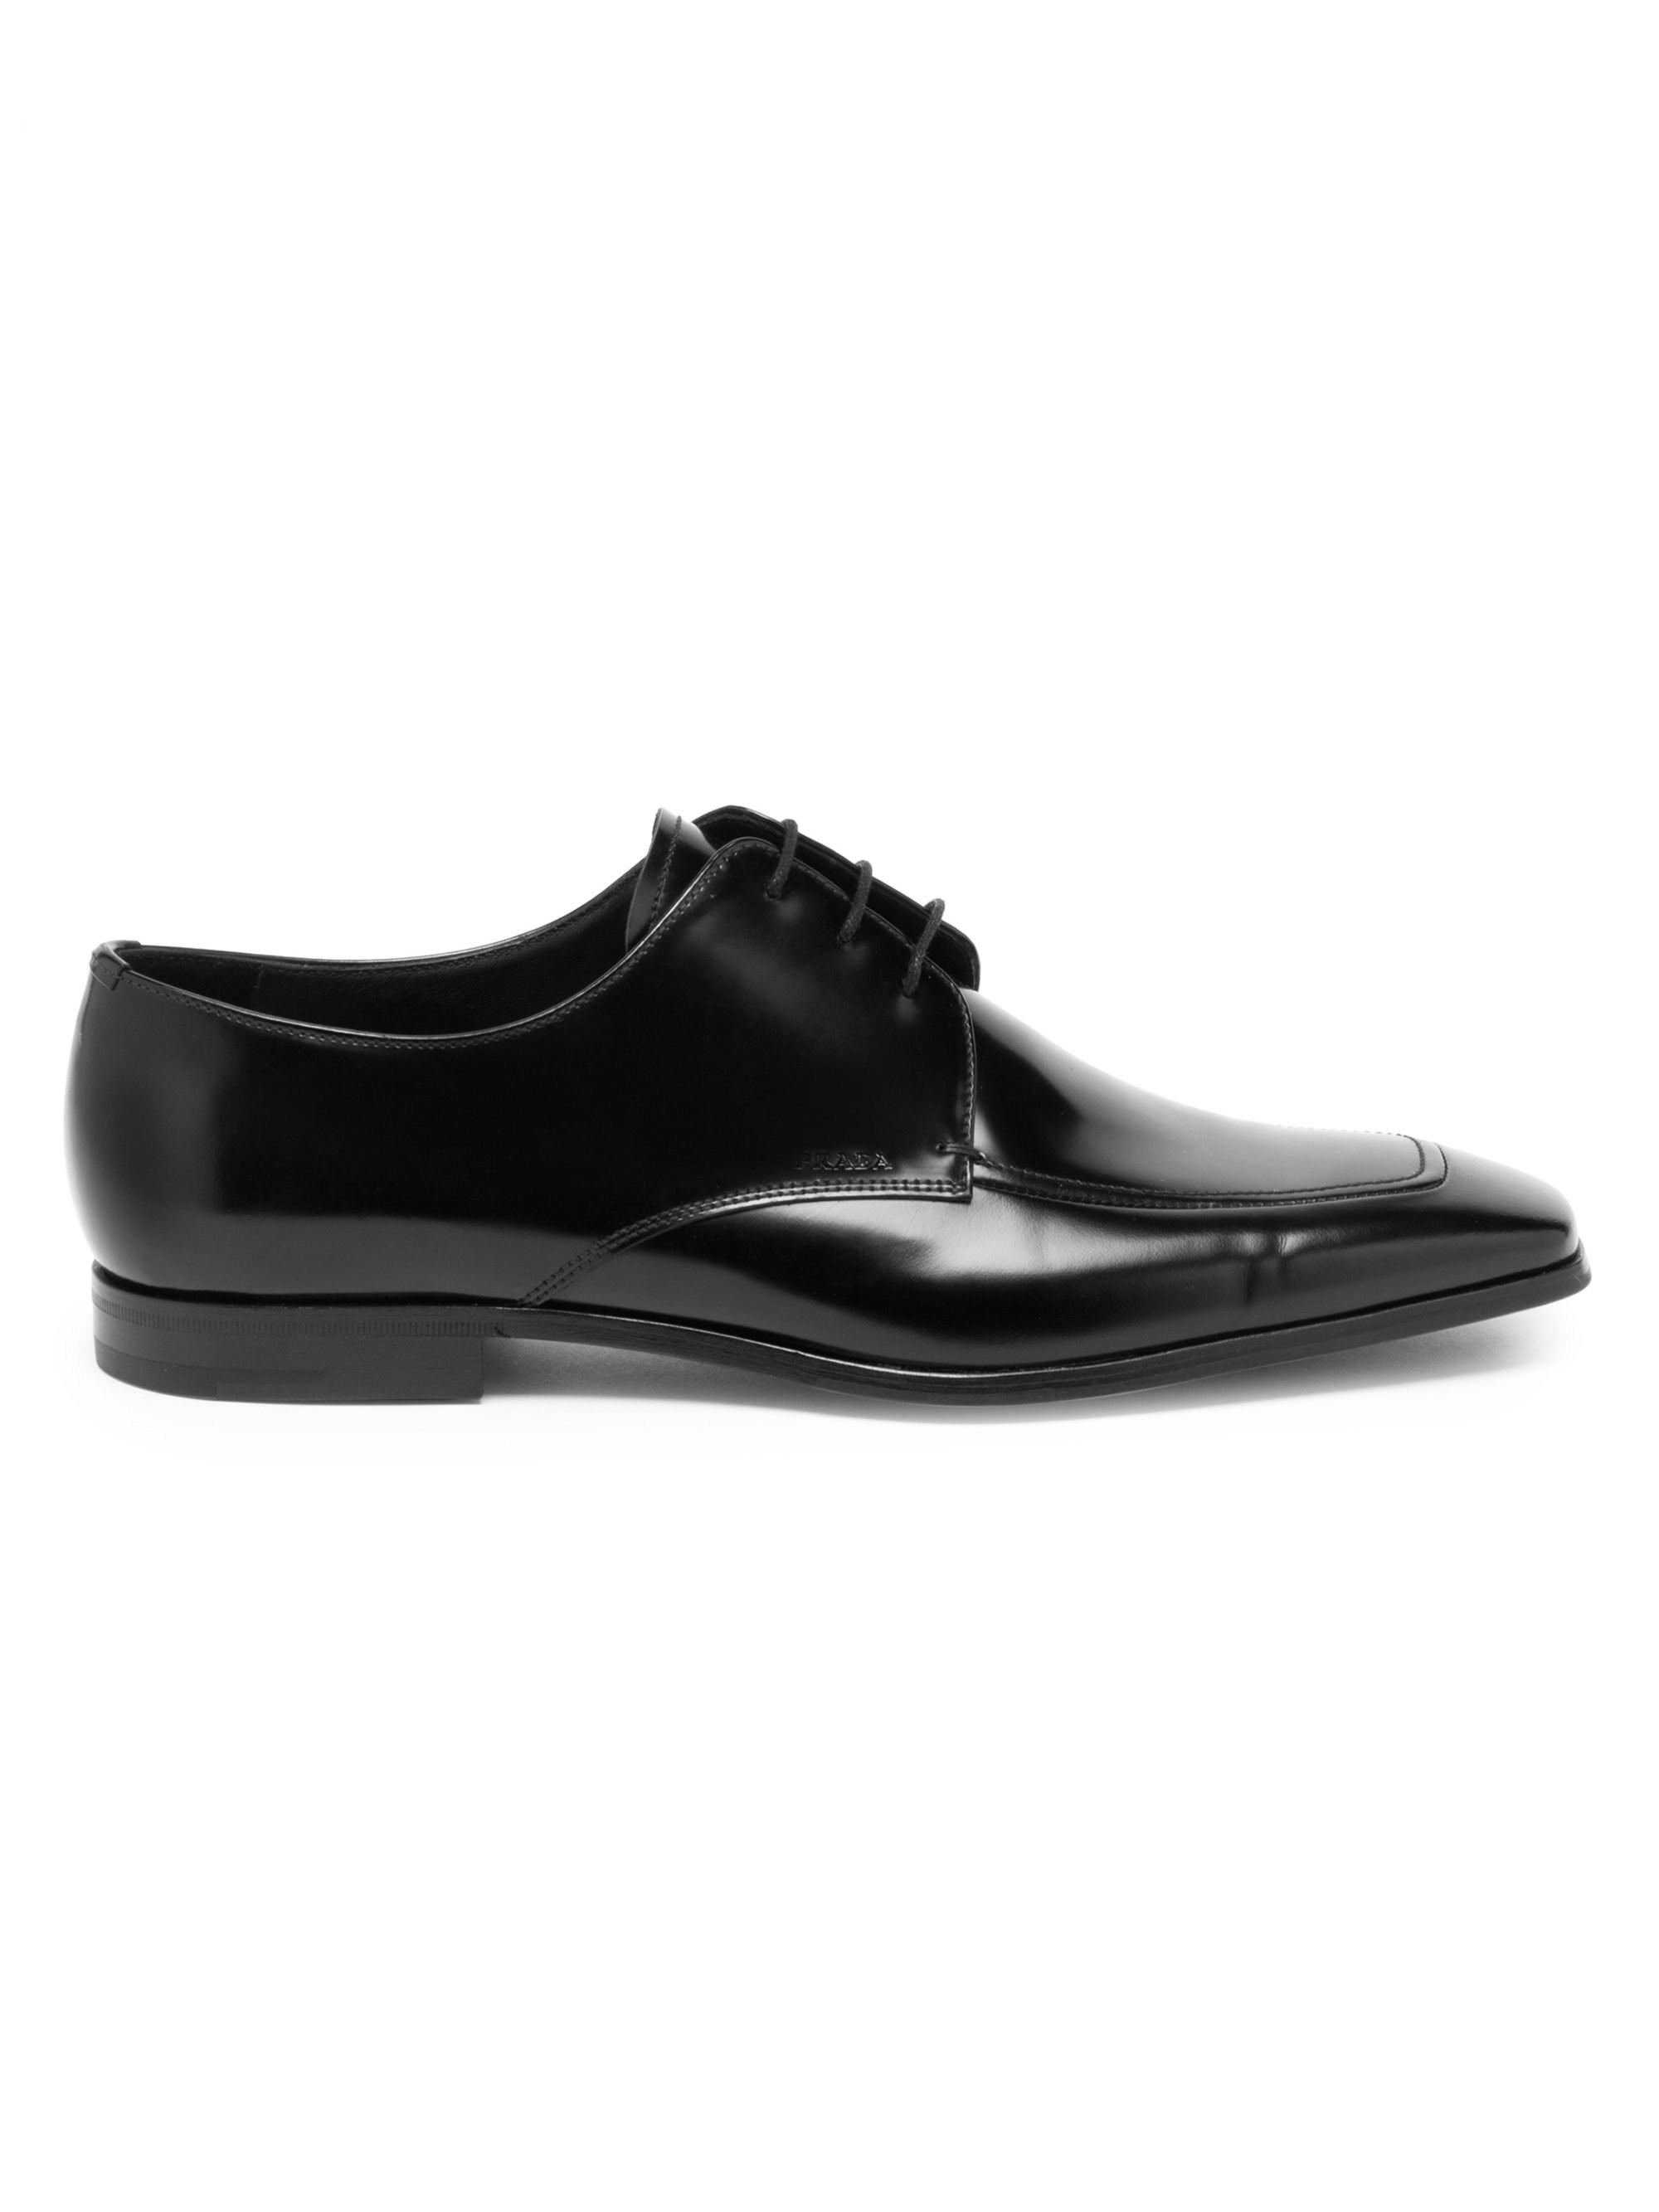 Prada Men's Spazzolato Fume Leather Dress Shoes - Black - Size 5 for ...